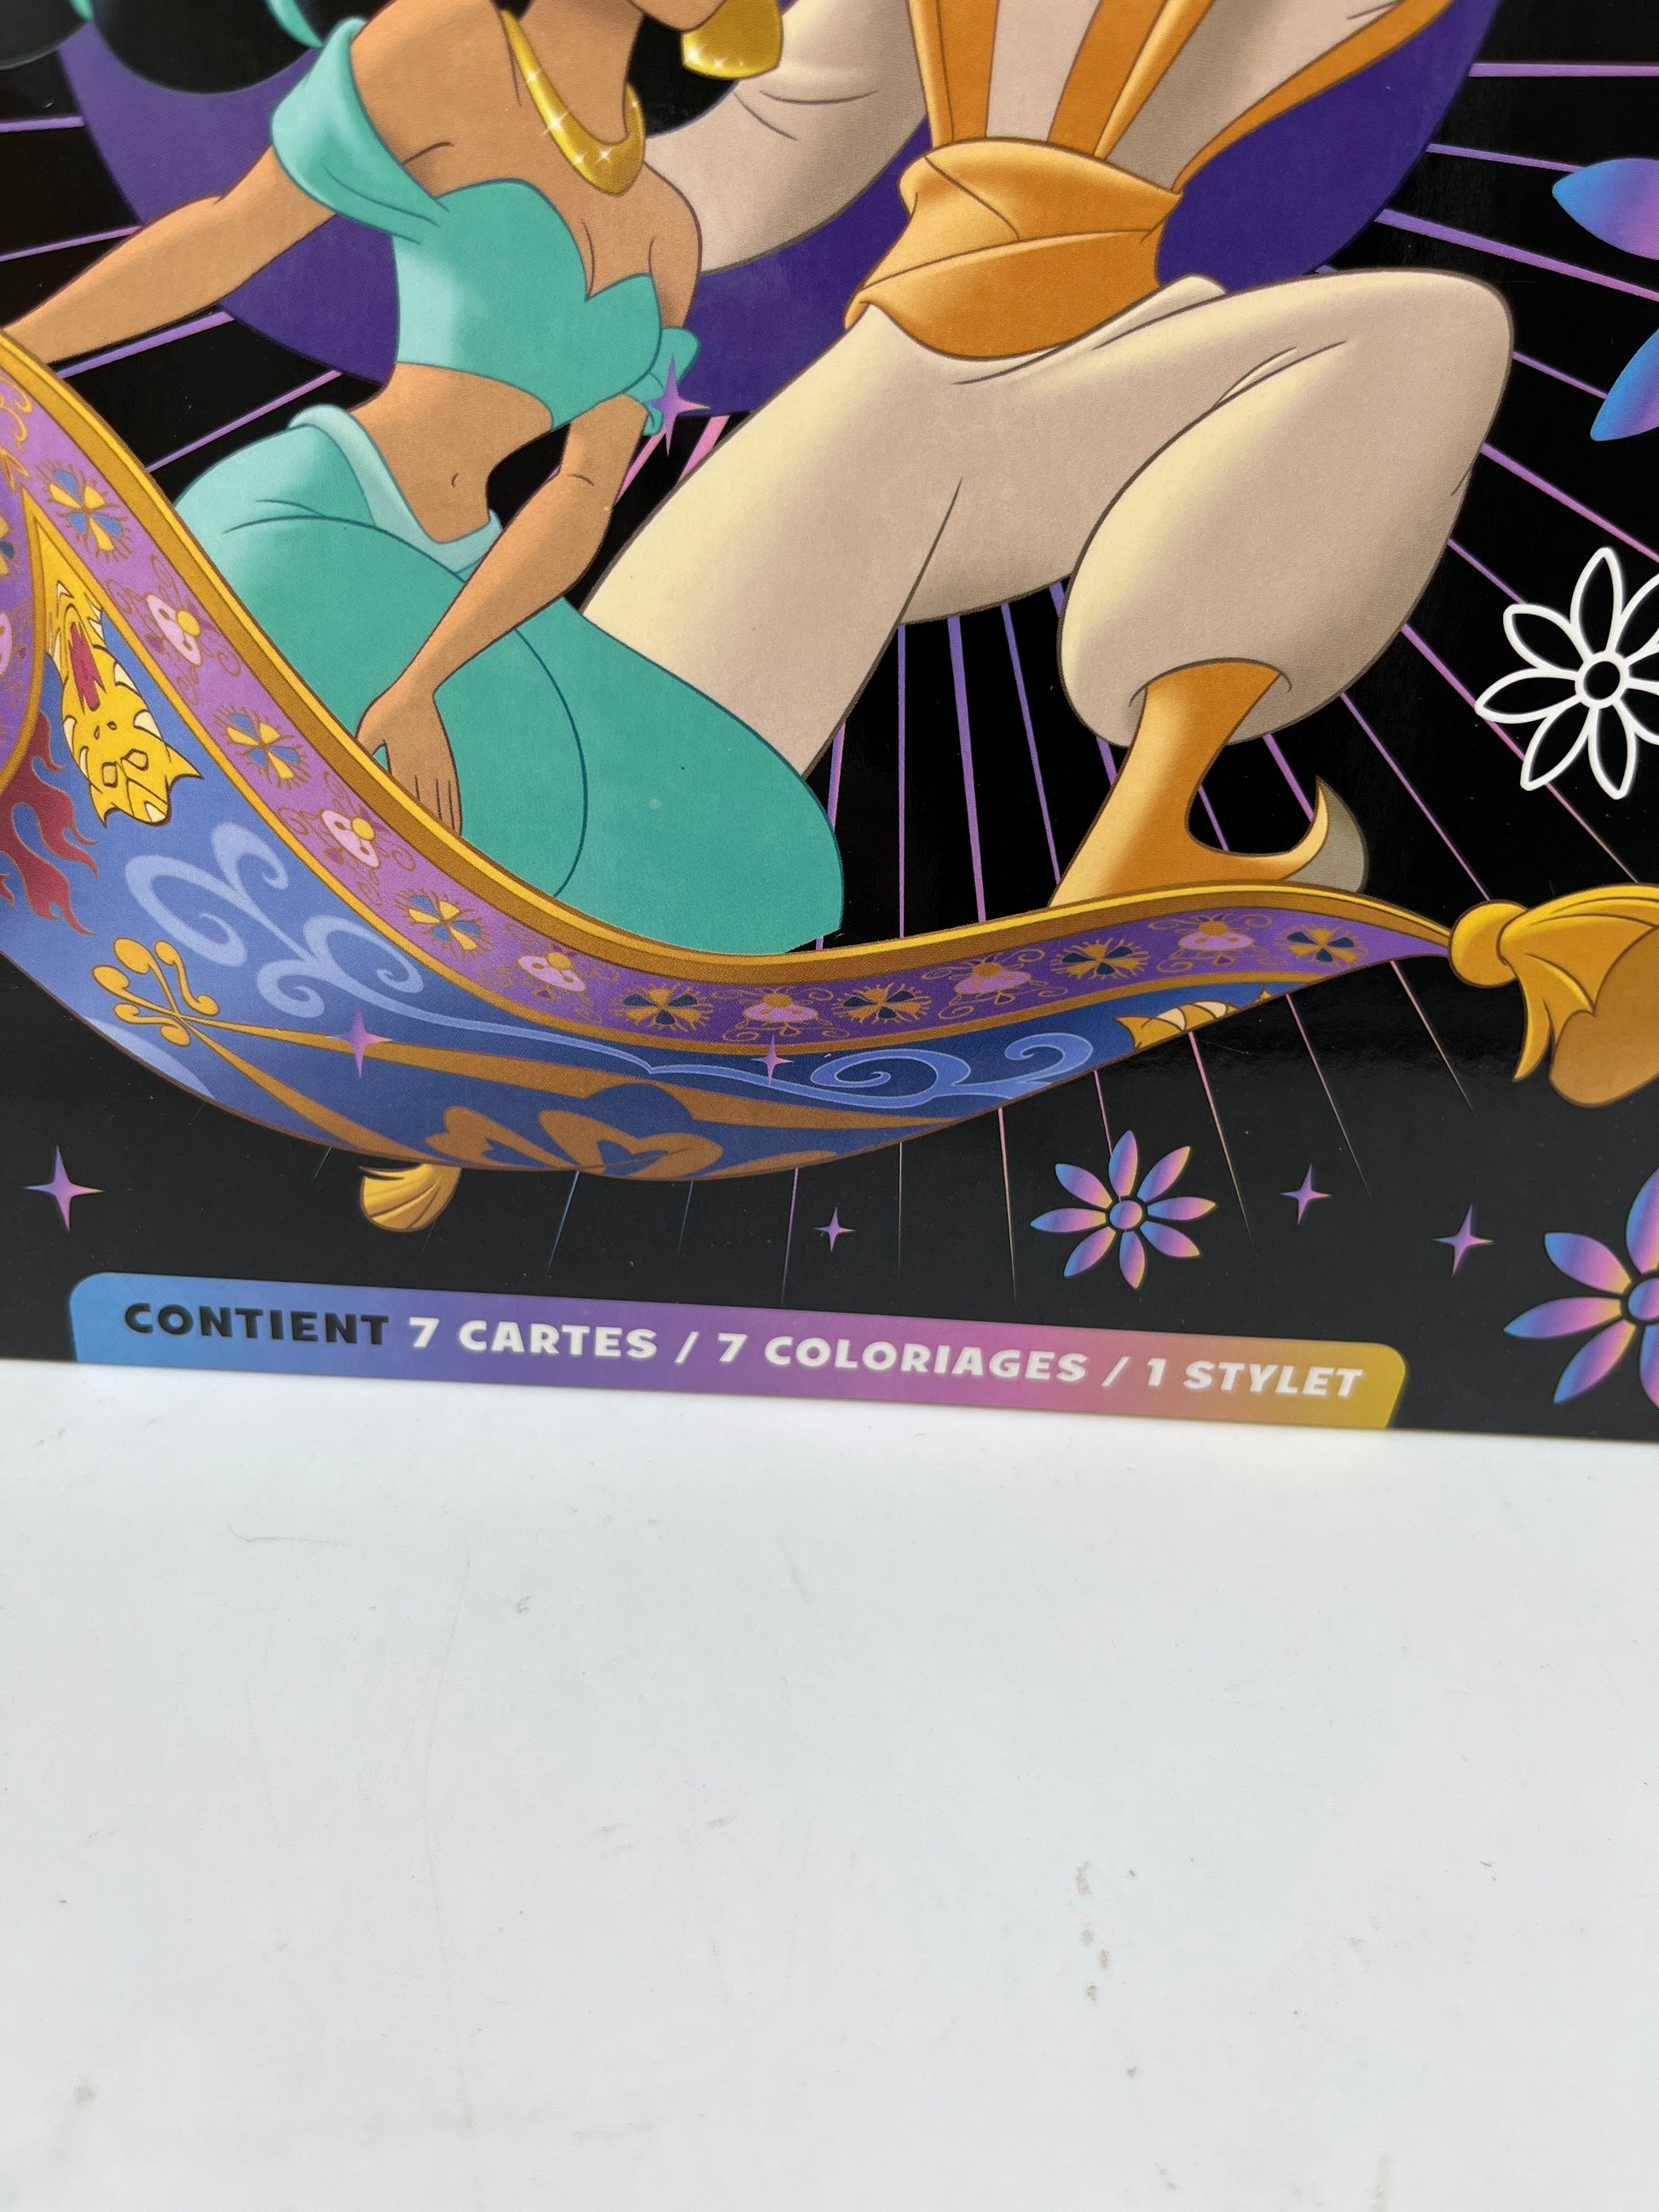 Disney - Cartes à gratter : Disney Princess